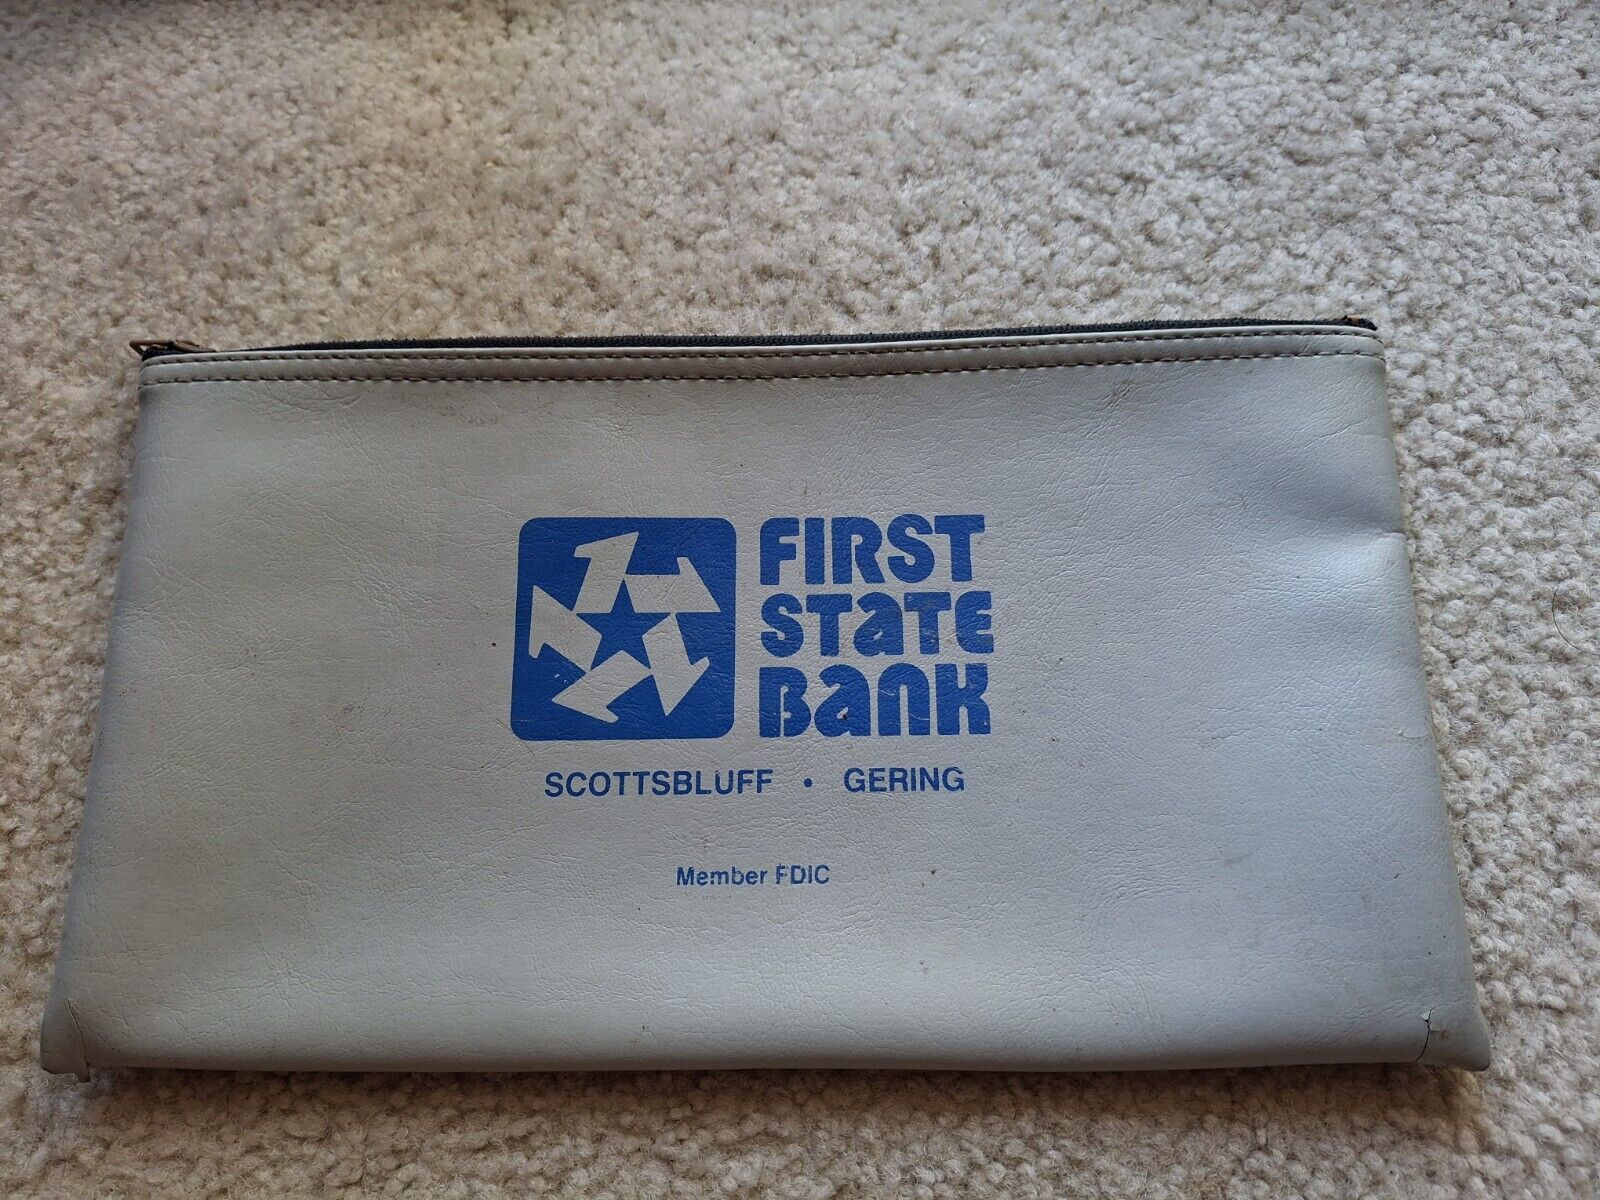 First State Bank Scottsbluff Gering Nebraska Vintage Grey Leather Zipper Bag